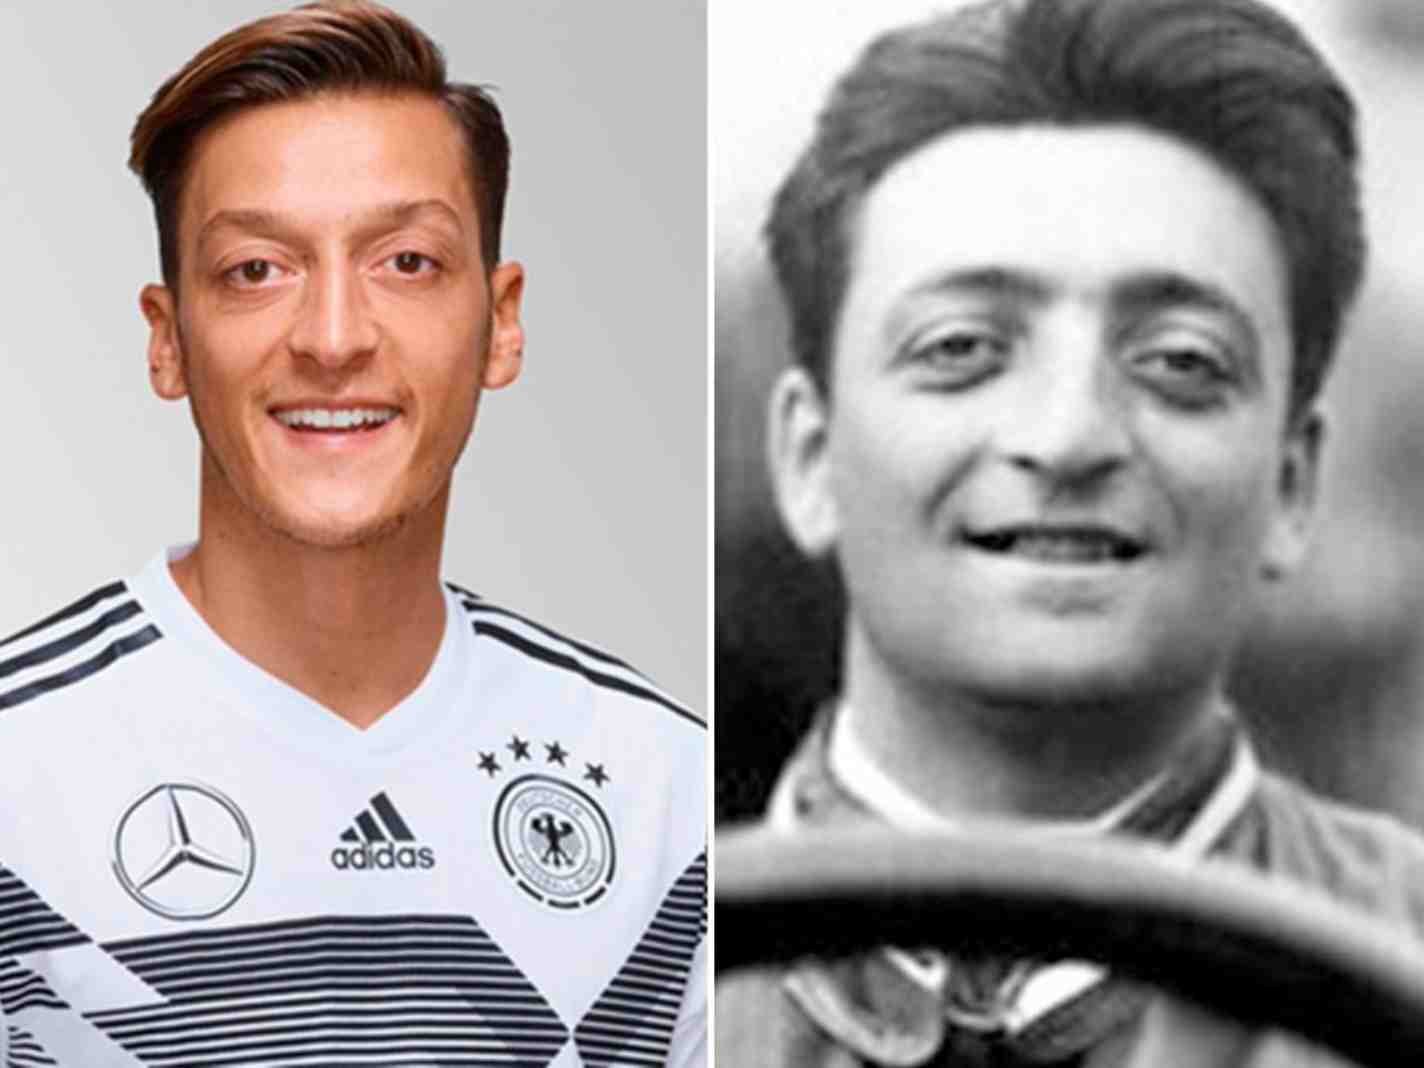 Enzo Ferrari died the same year that his look-alike, Mesut Ozil, was born.